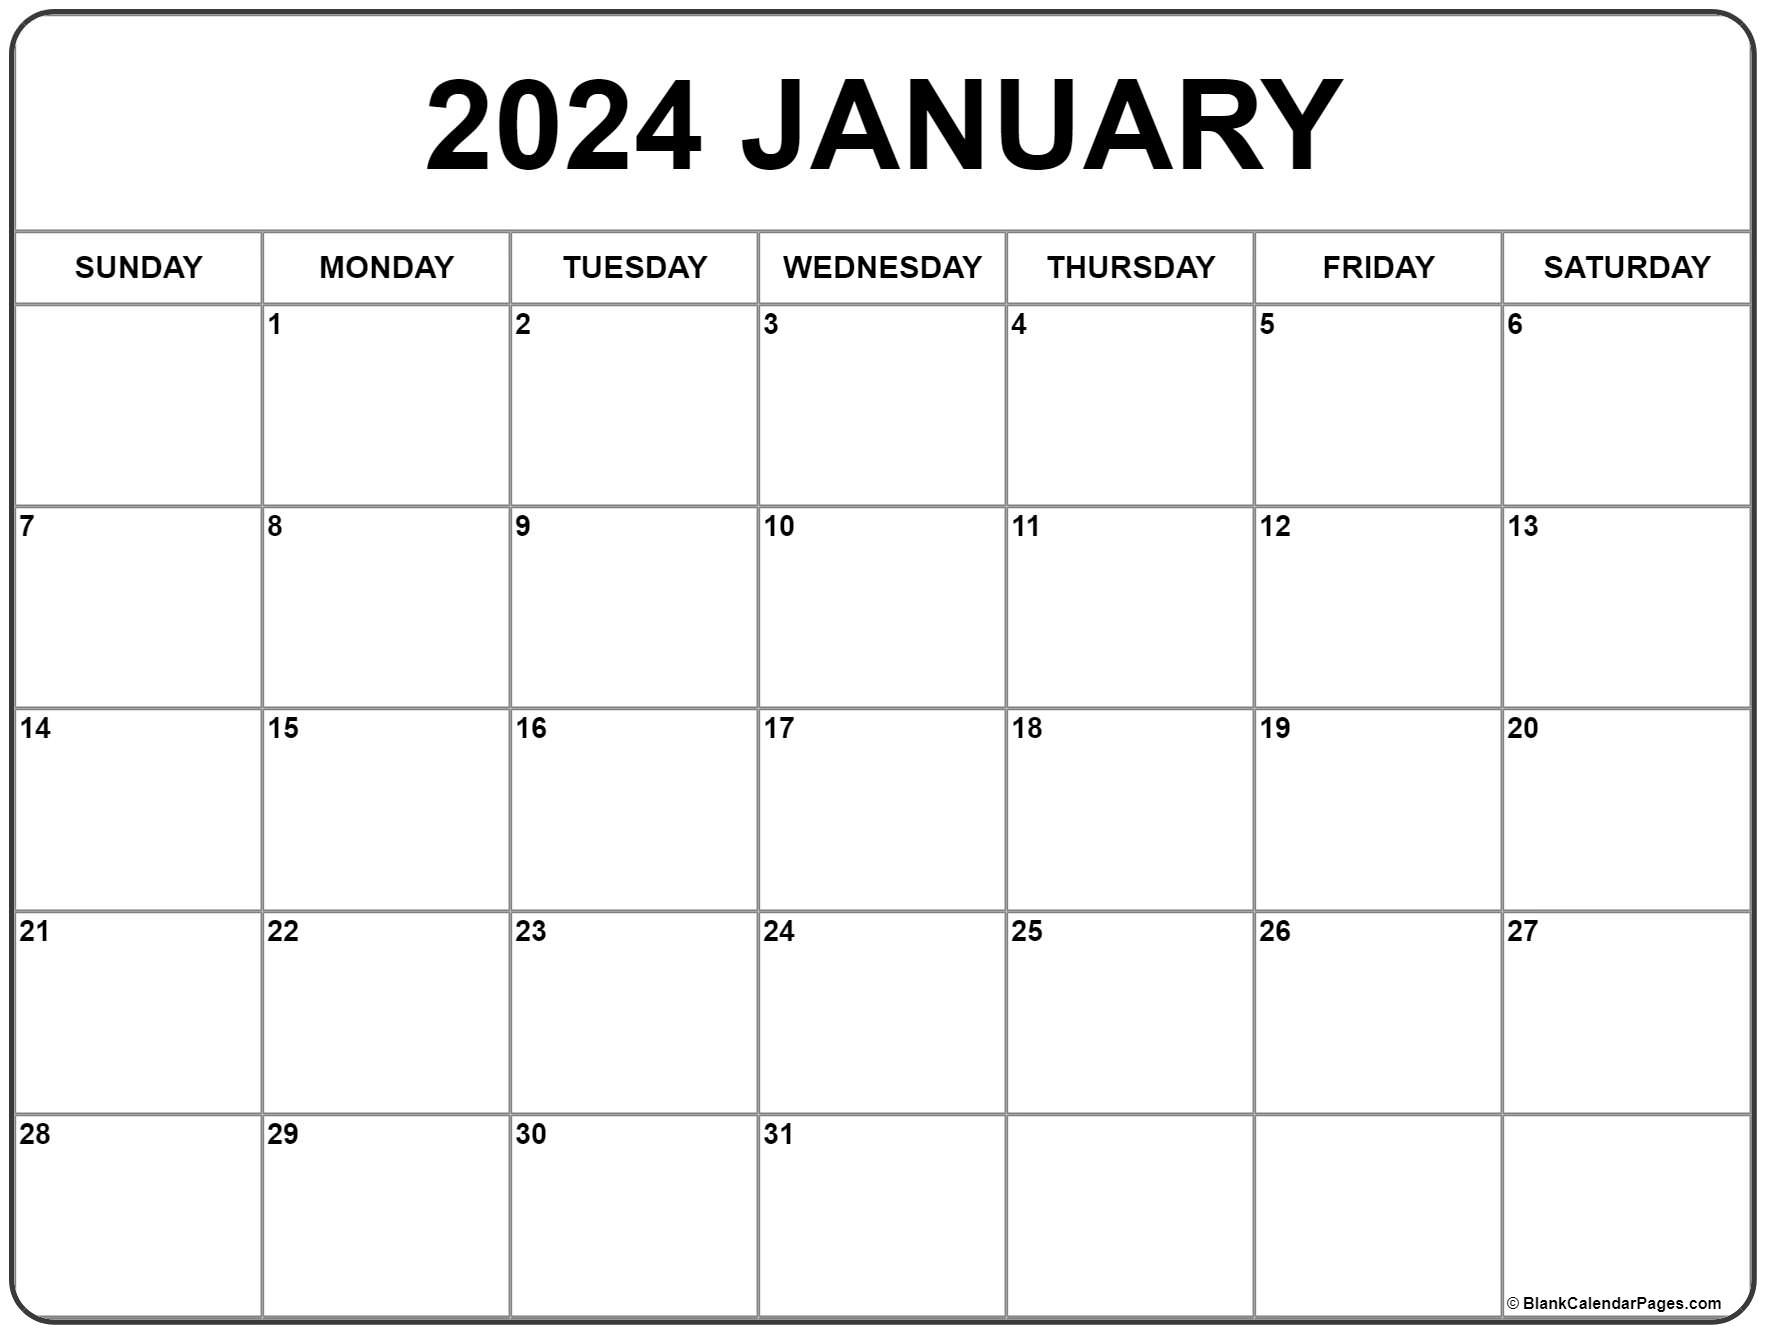 January 2024 Calendar | Free Printable Calendar for Printable 2024 Calendar January